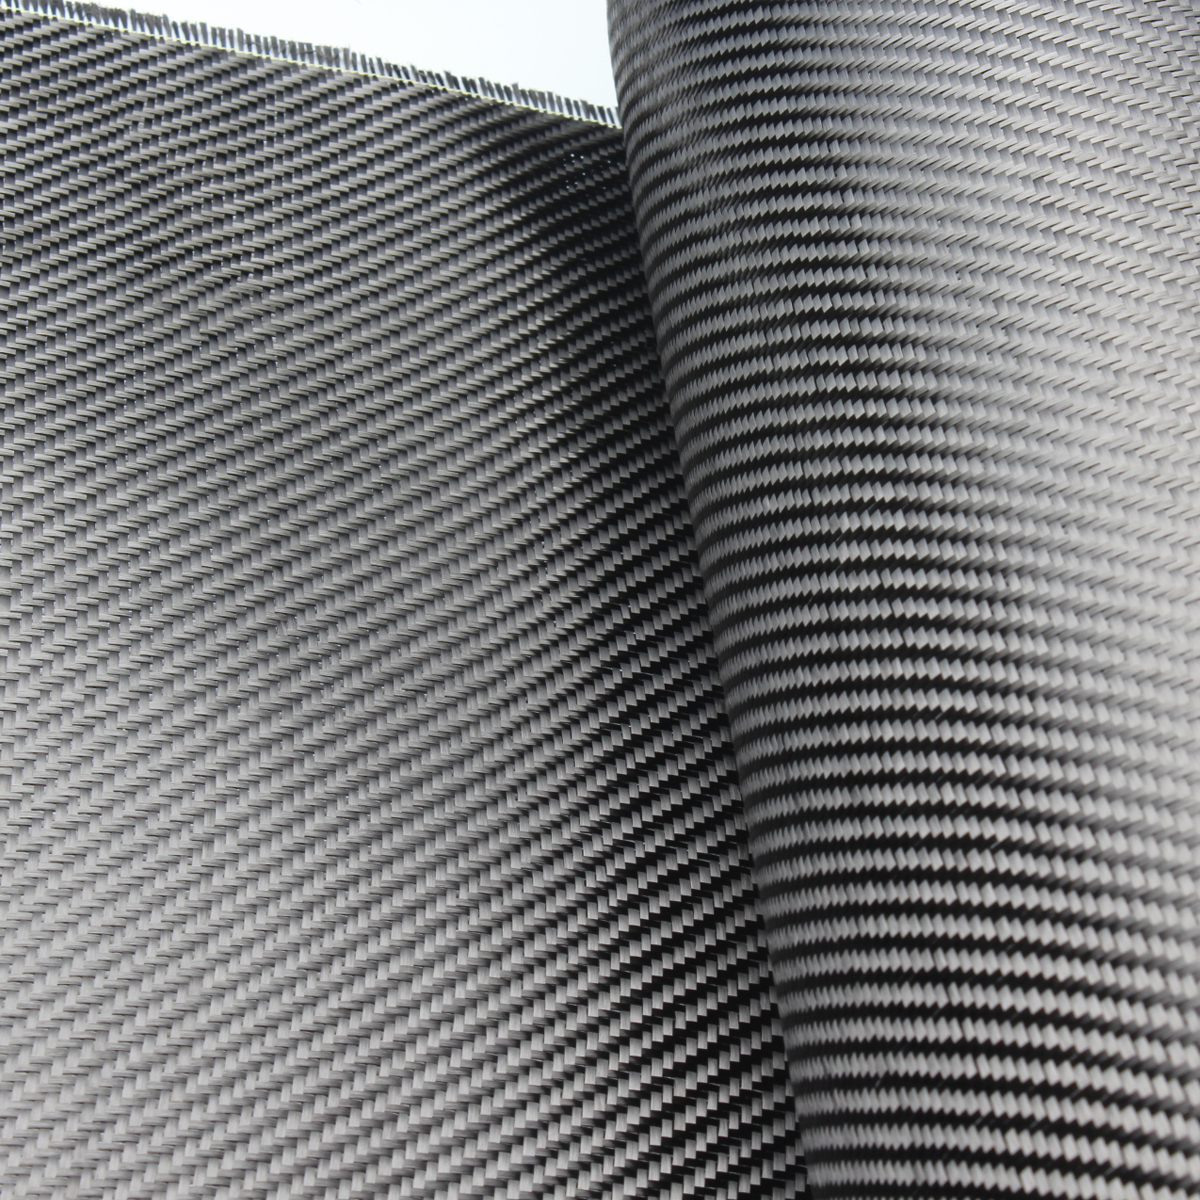 T700 12k 600gsm tejido de sarga telas de tela de fibra de carbono de alta resistencia